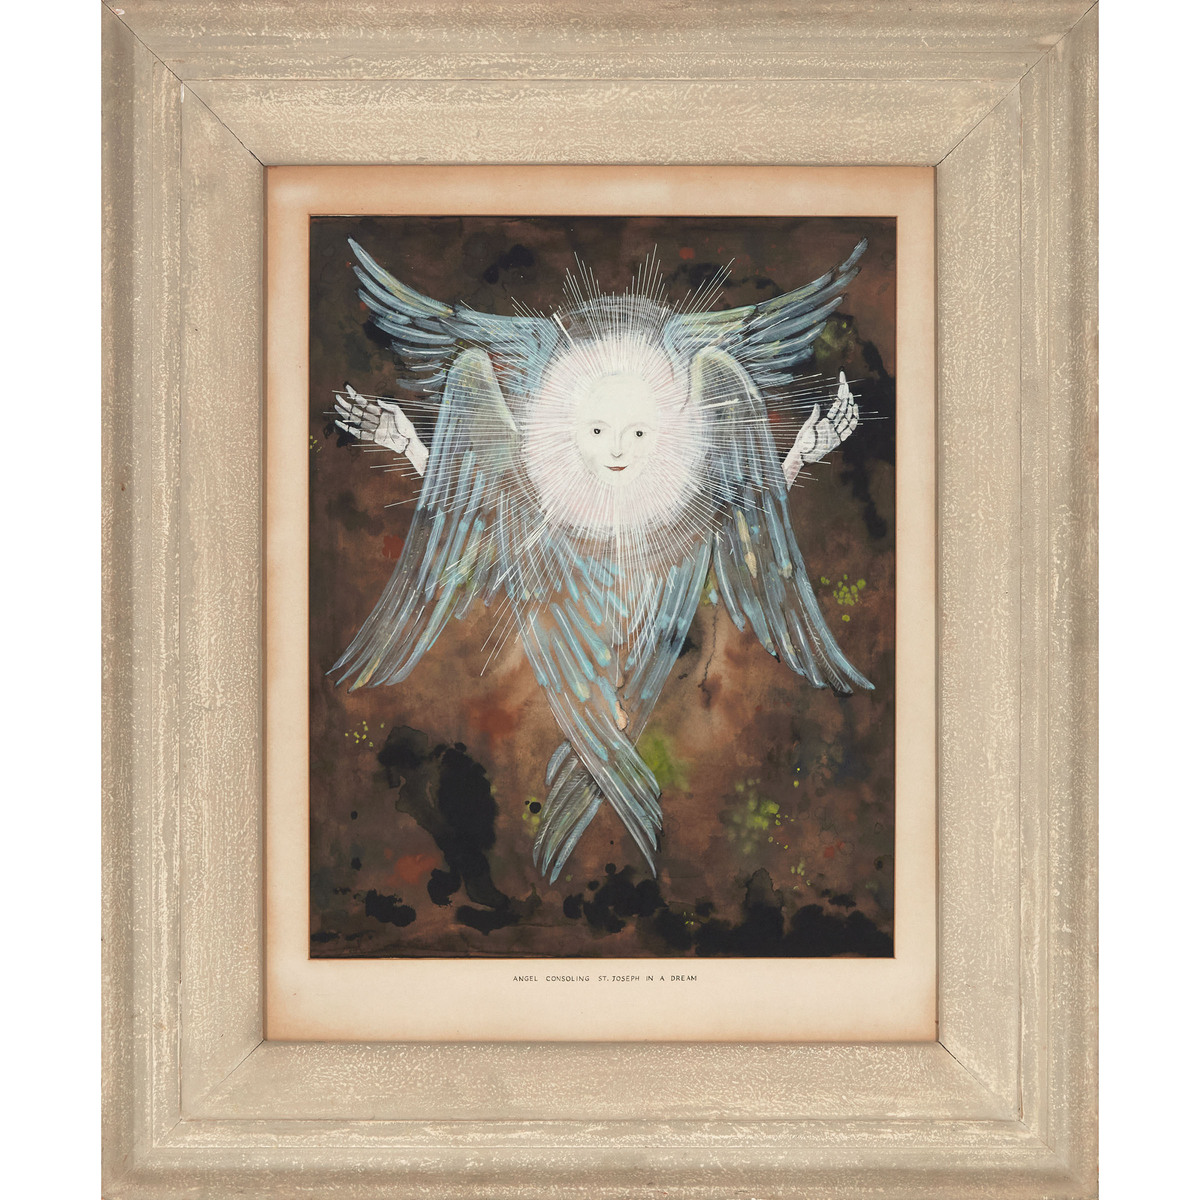 William Kurelek, RCA (1927-1977), ANGEL CONSOLING ST. JOSEPH IN A DREAM, 1962, 23 x 20 in — 58.4 x 5 - Image 2 of 6